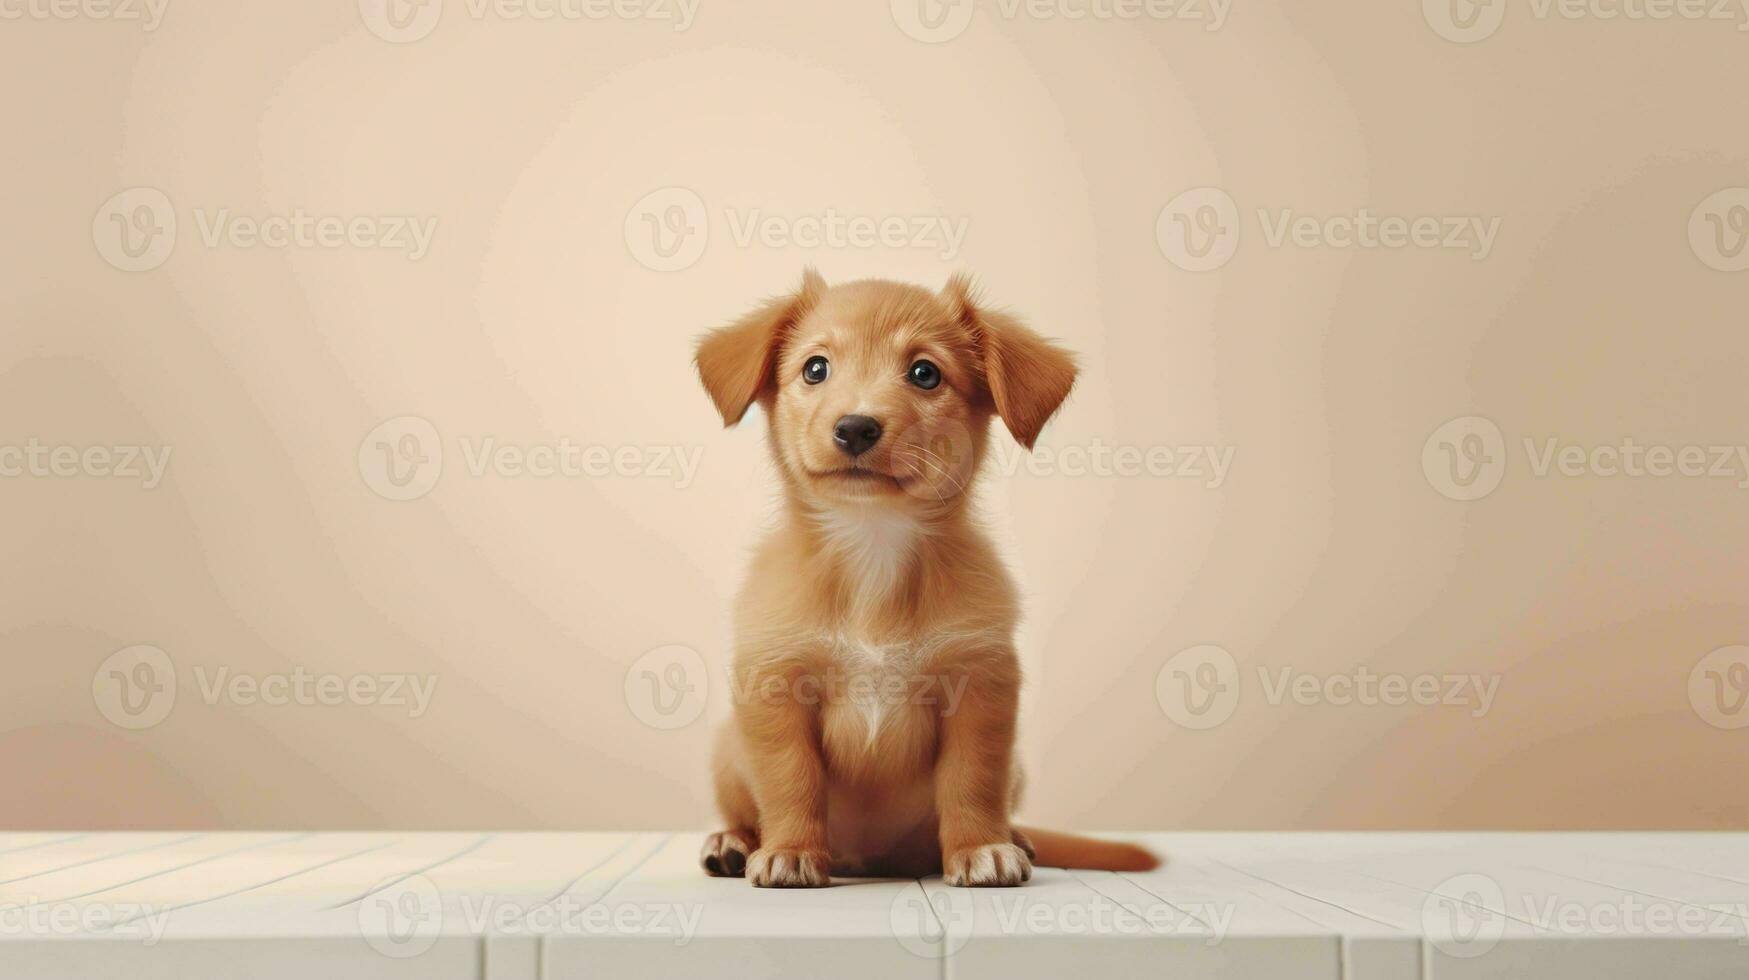 Adorable dog in serene minimalist setting photo